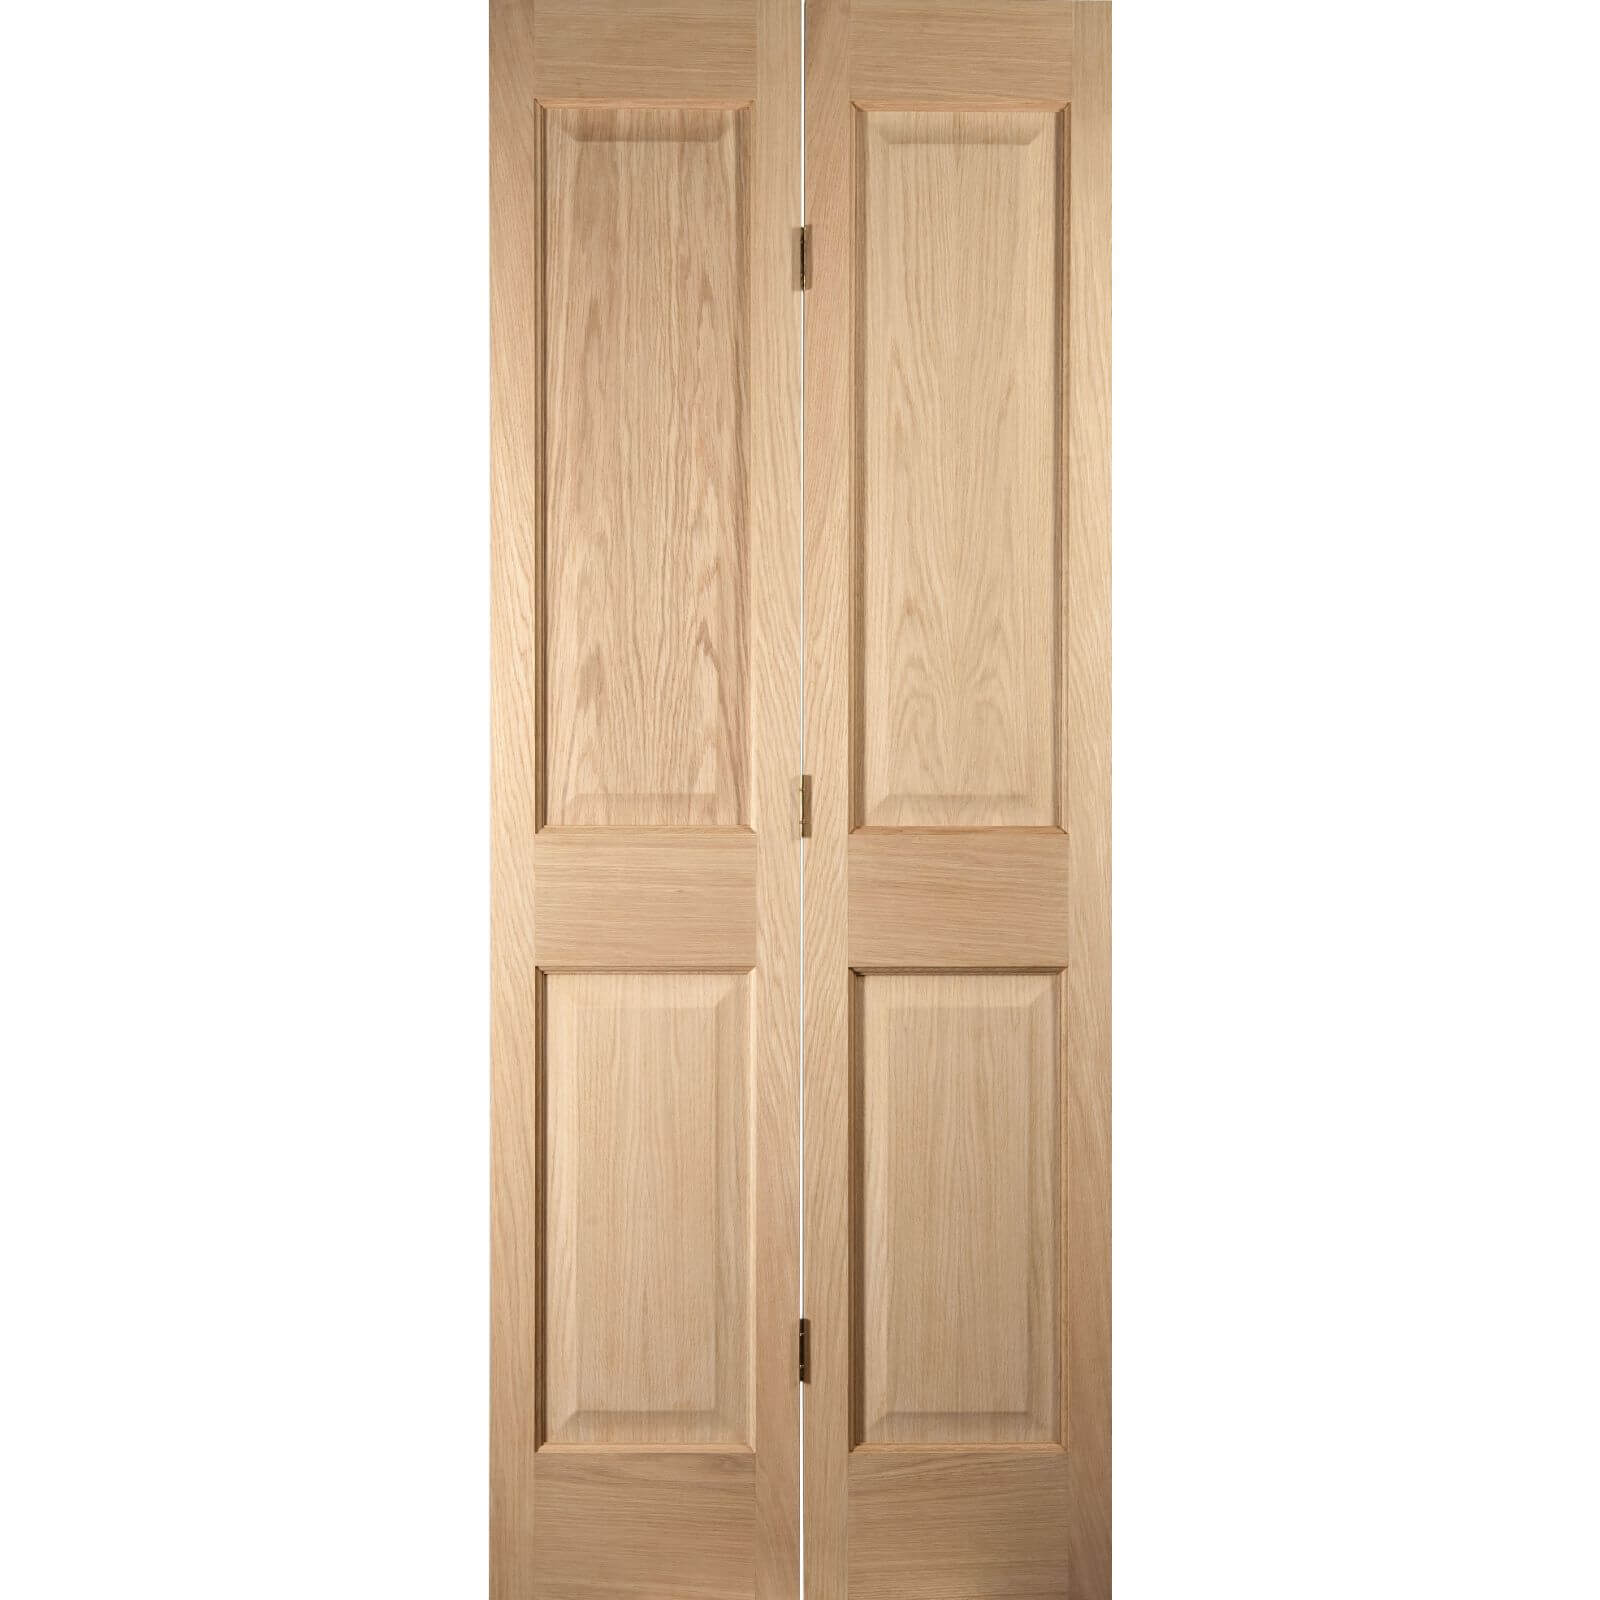 Photo of 4 Panel White Oak Veneer Internal Bi-fold Door - 610mm Wide